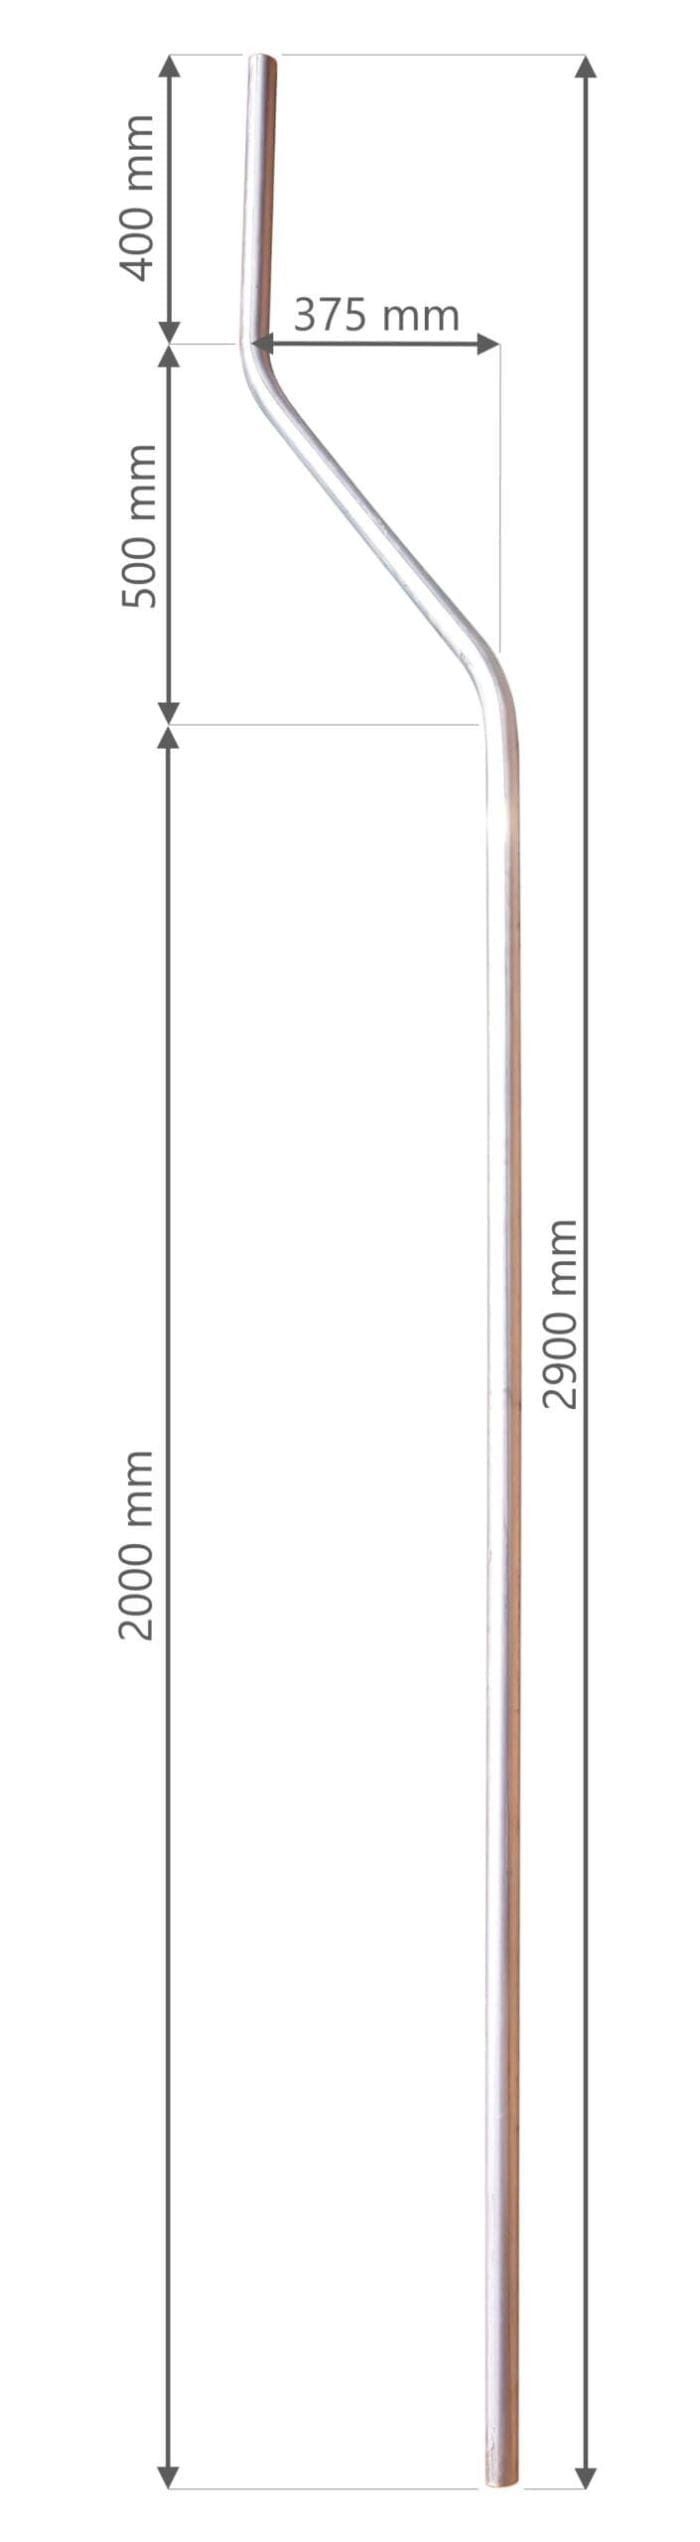 pole-curved-3m-38x1.6-aluminium-dimensions